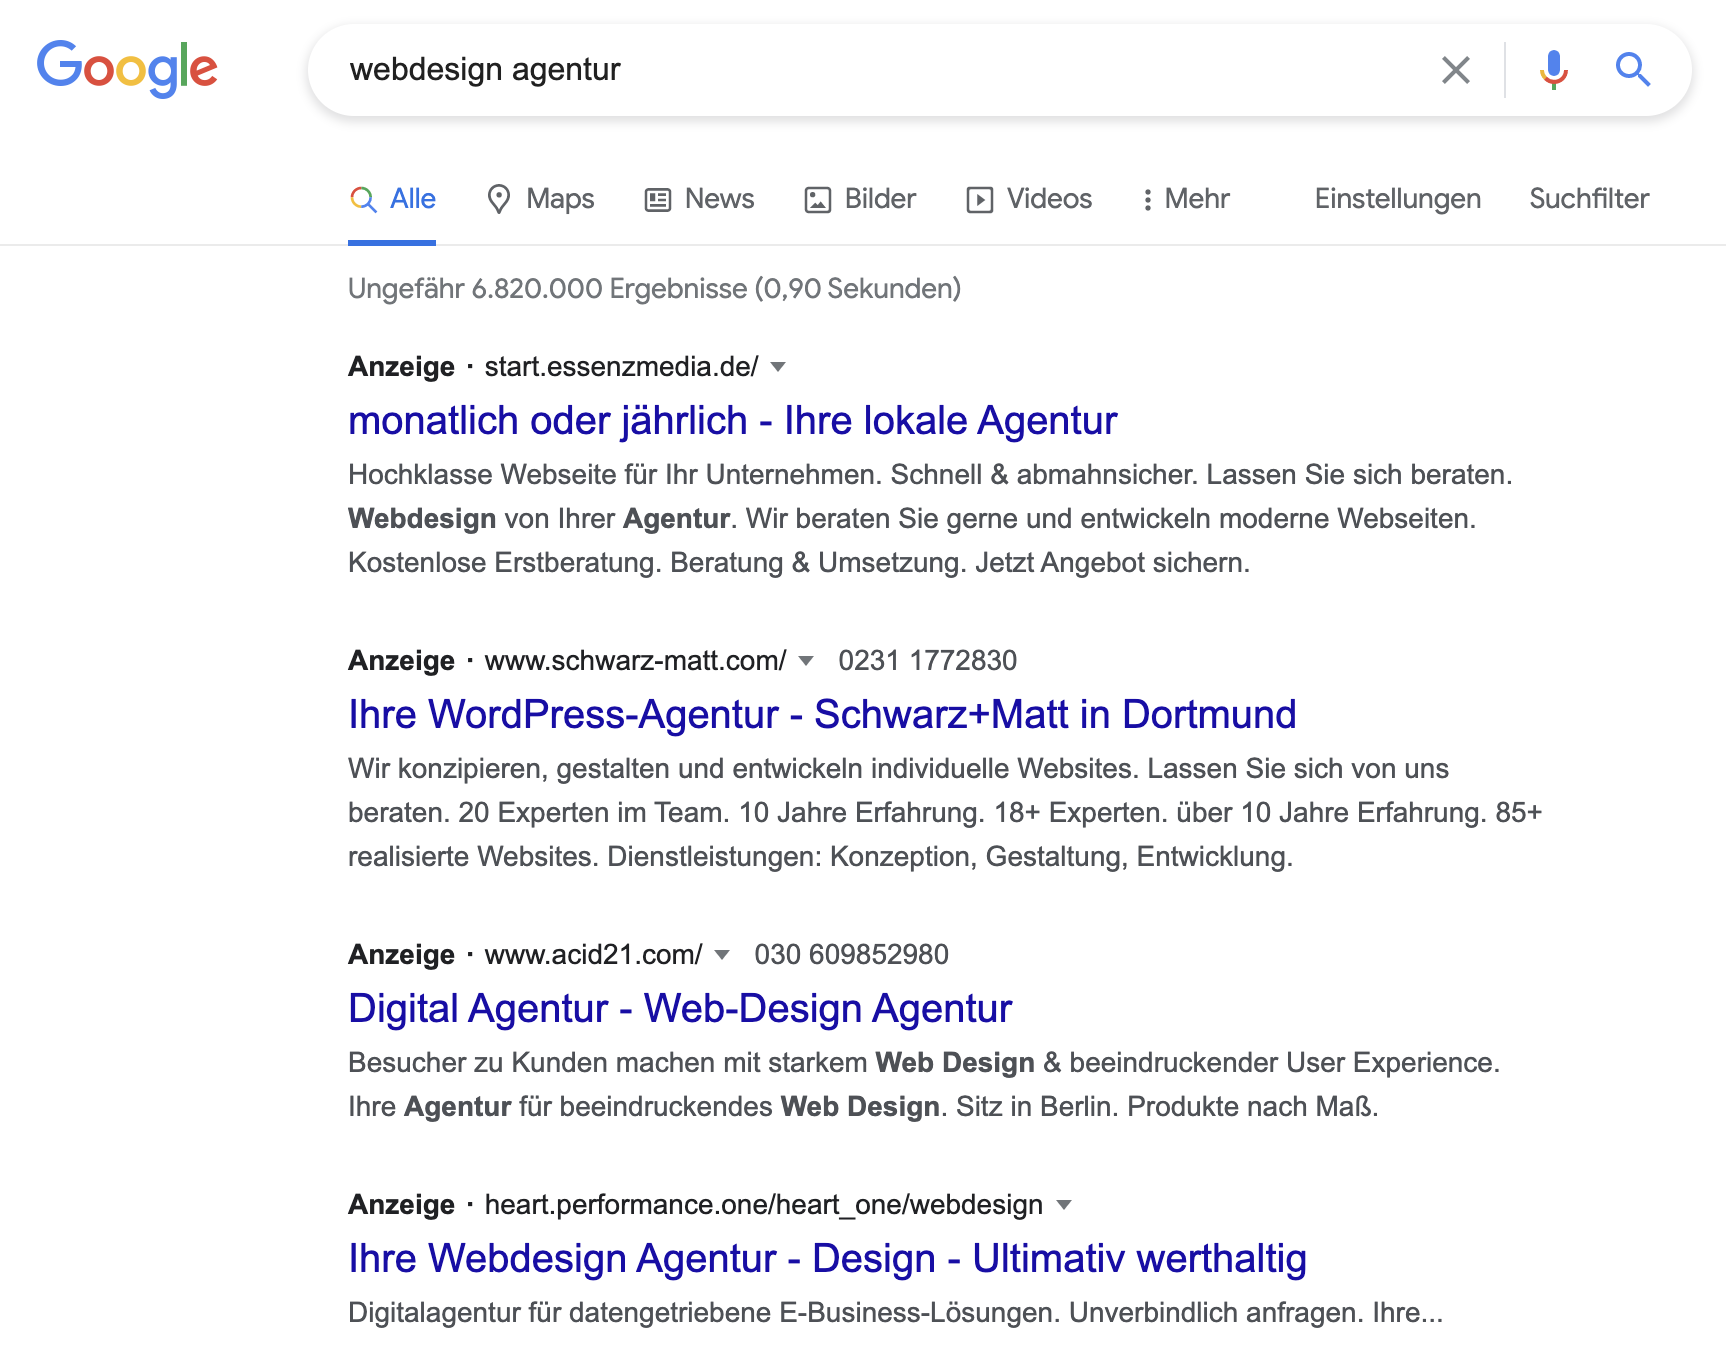 webdesign agentur screenshot google ergebnisse